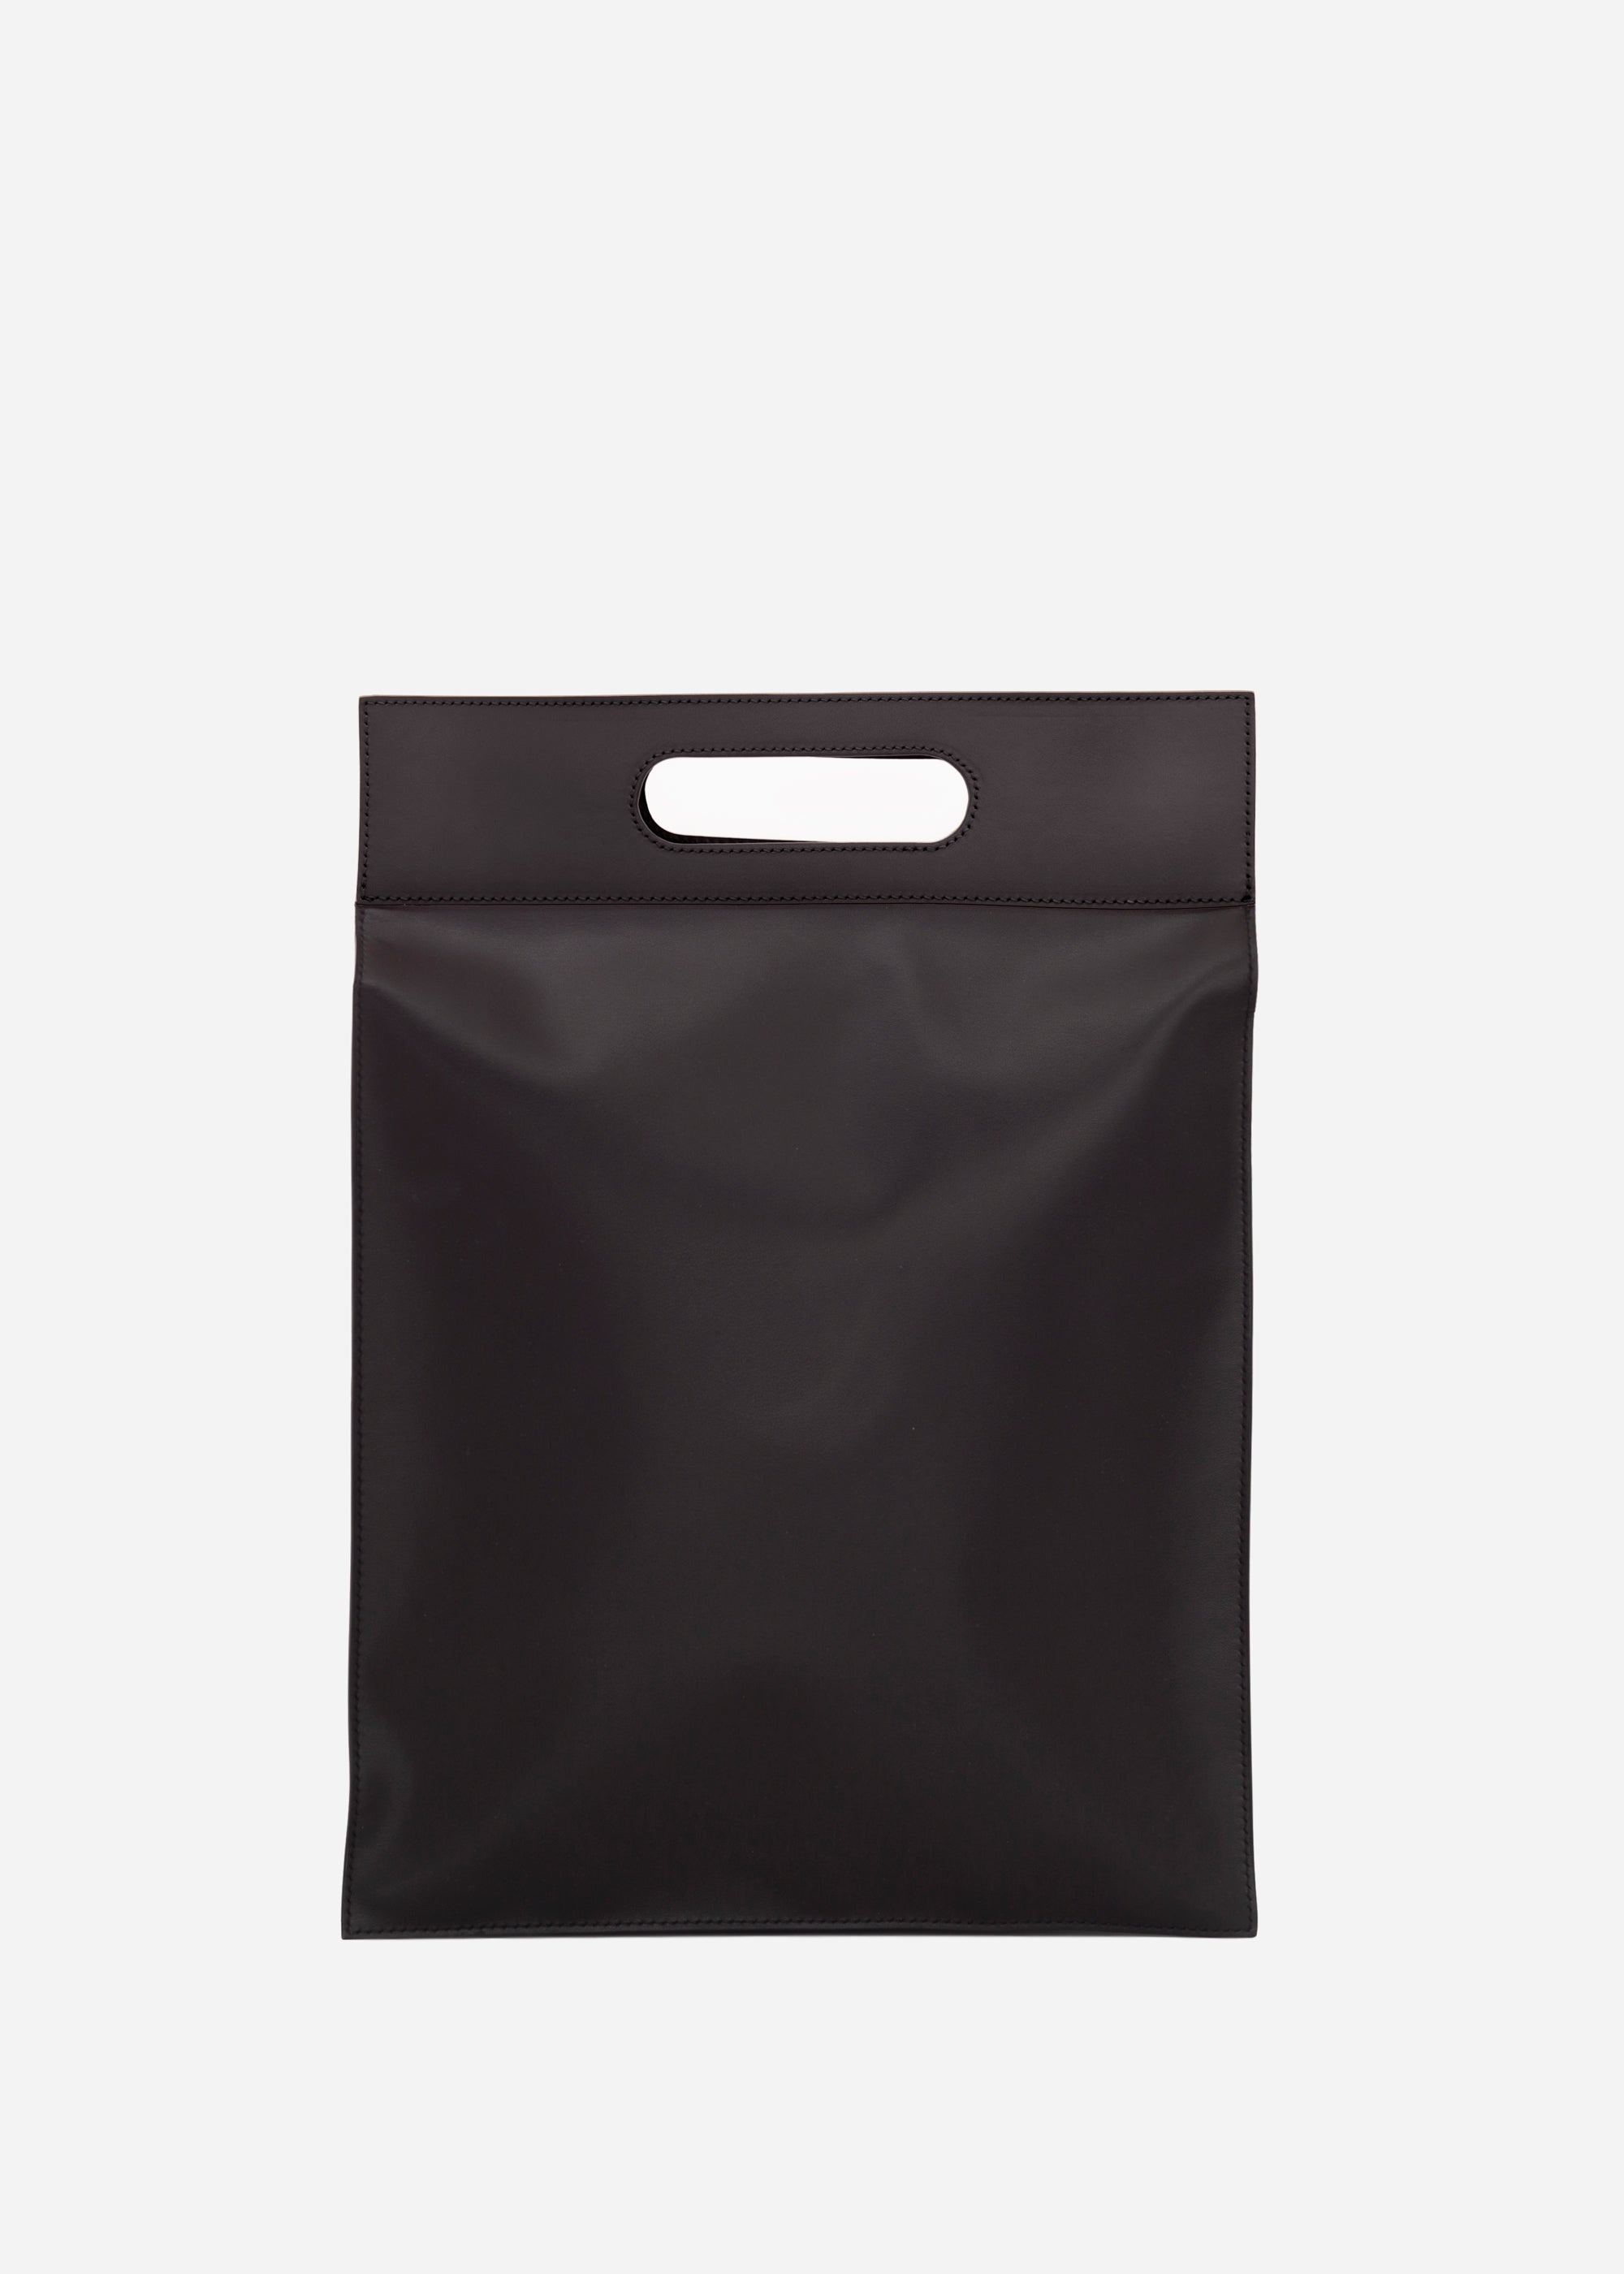 Flat Laptop Tote Bag Sarany - Black leather